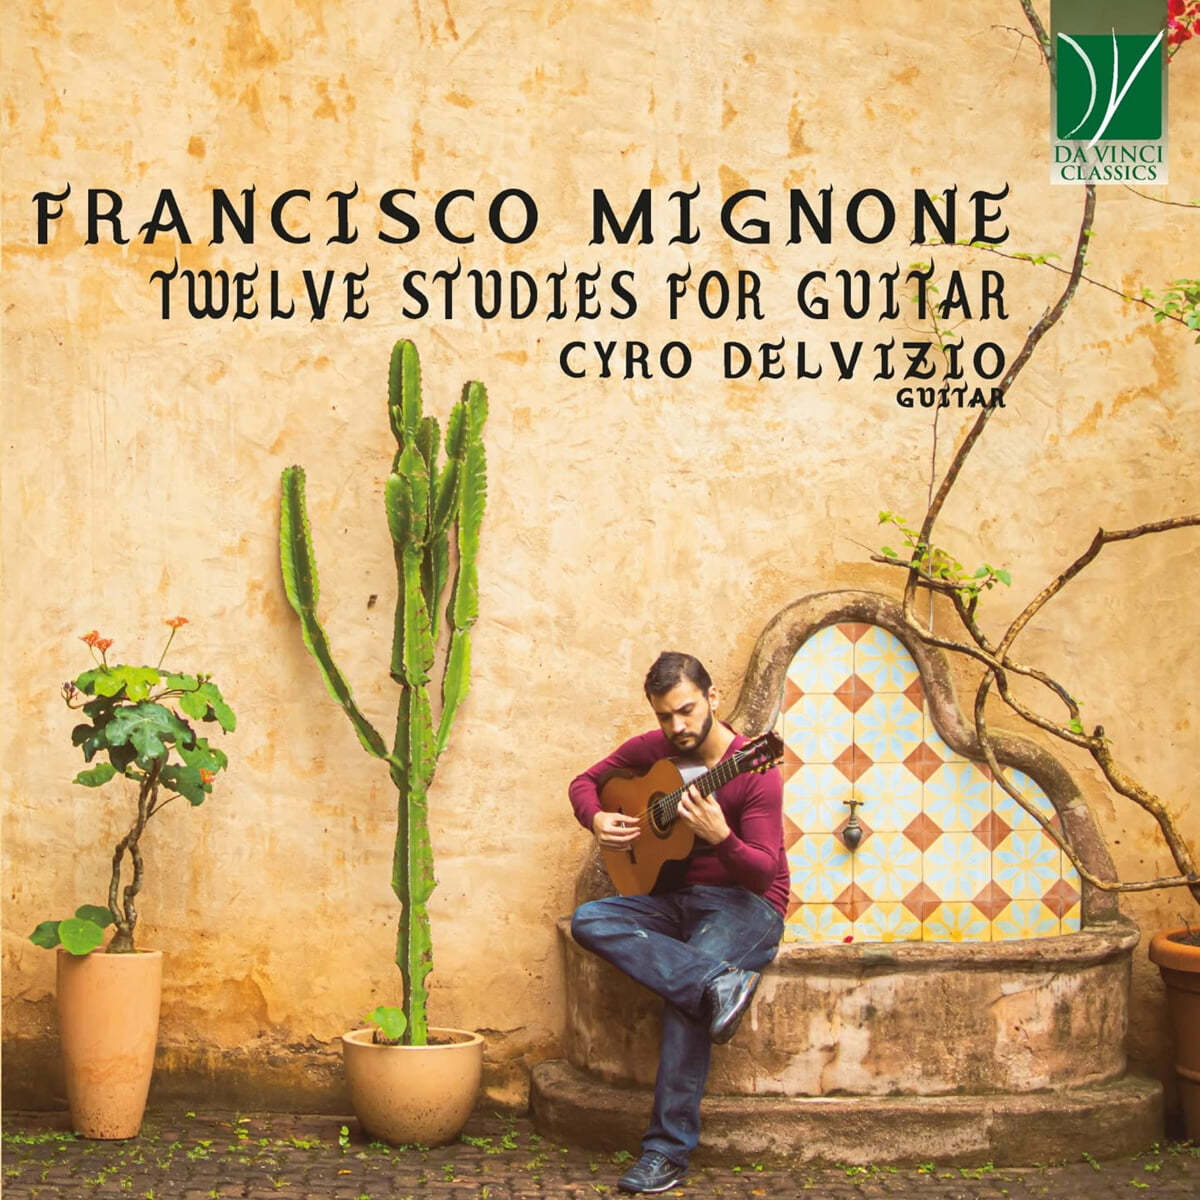 Cyro Delvizio 프란시스코 미뇨네: 열두 곡의 기타 연습곡 (Francisco Mignone: 12 Studies for Guitar)